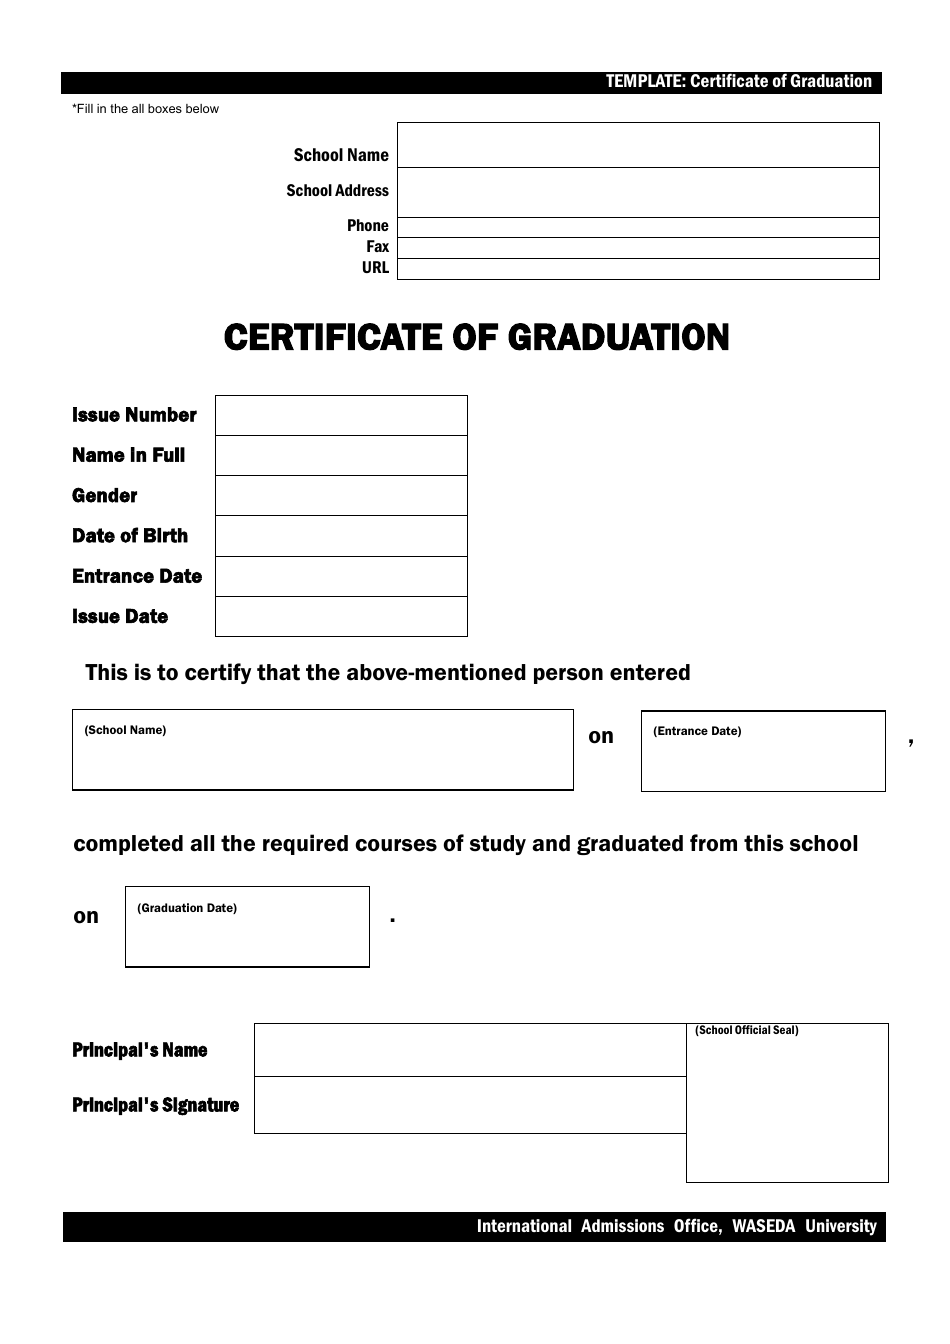 Certificate of Graduation Template with Black Design